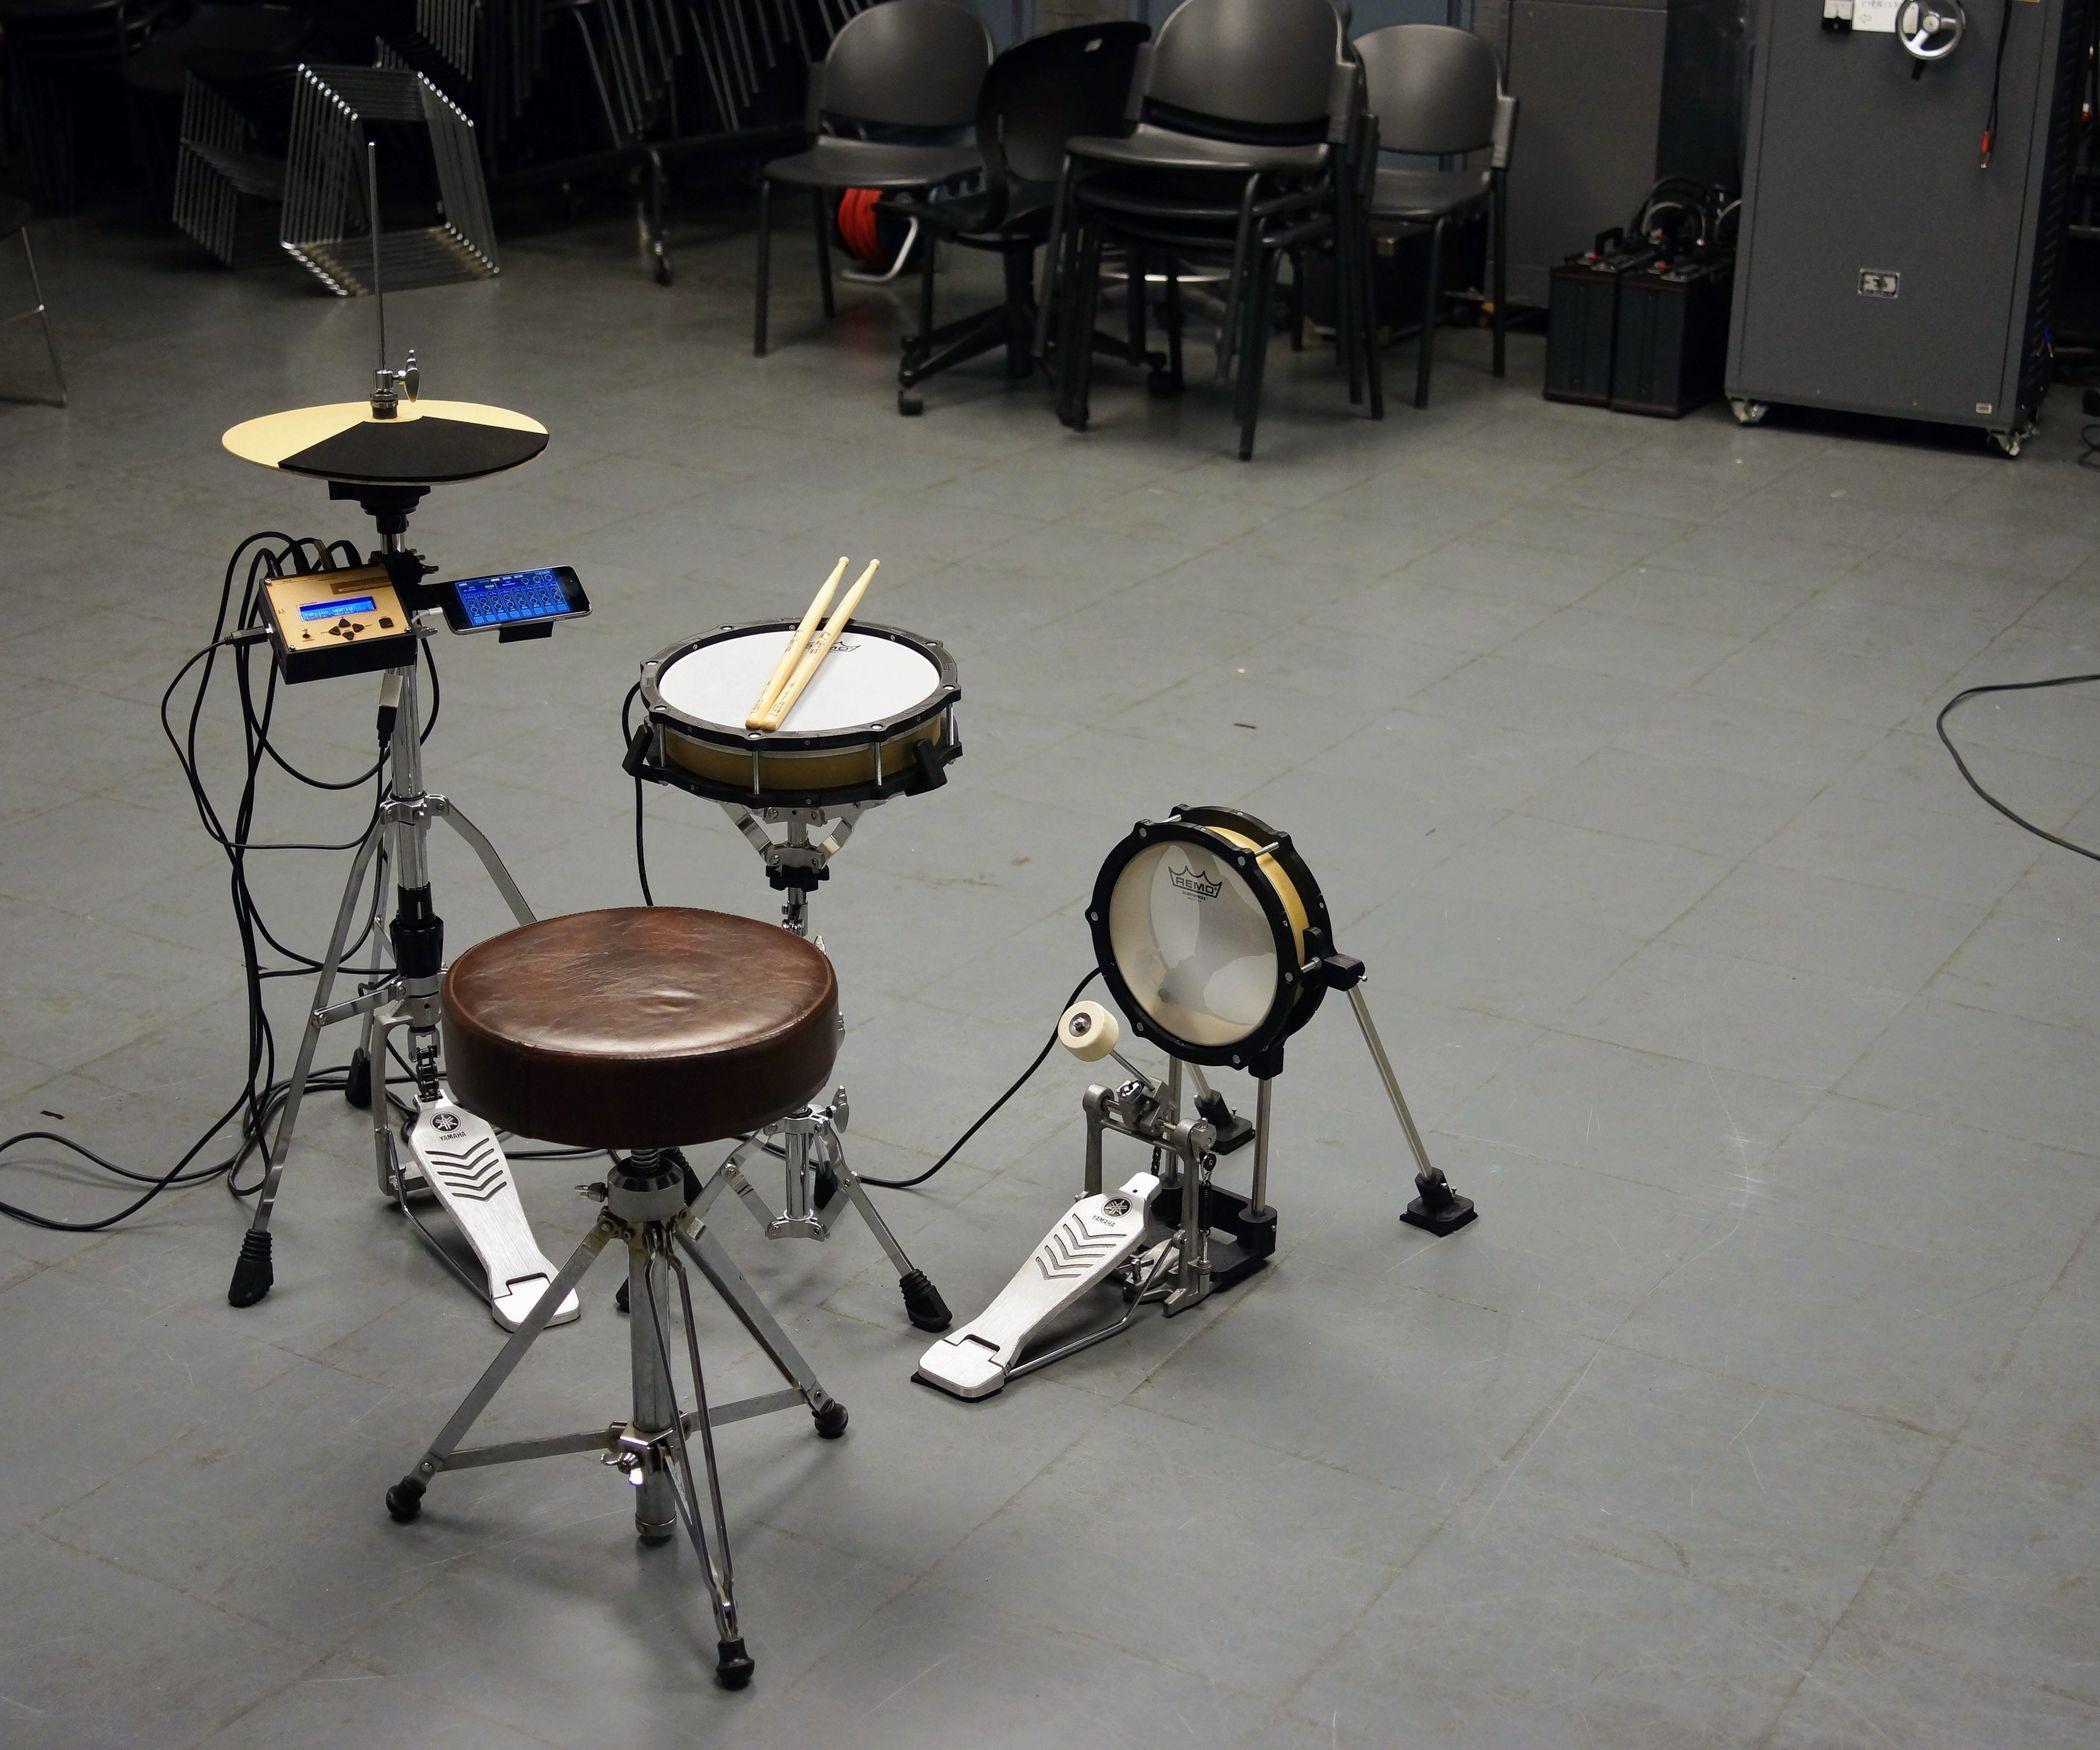 Arduino Minimal Drum Kit. Small 3D printer, Drum kit and Drums